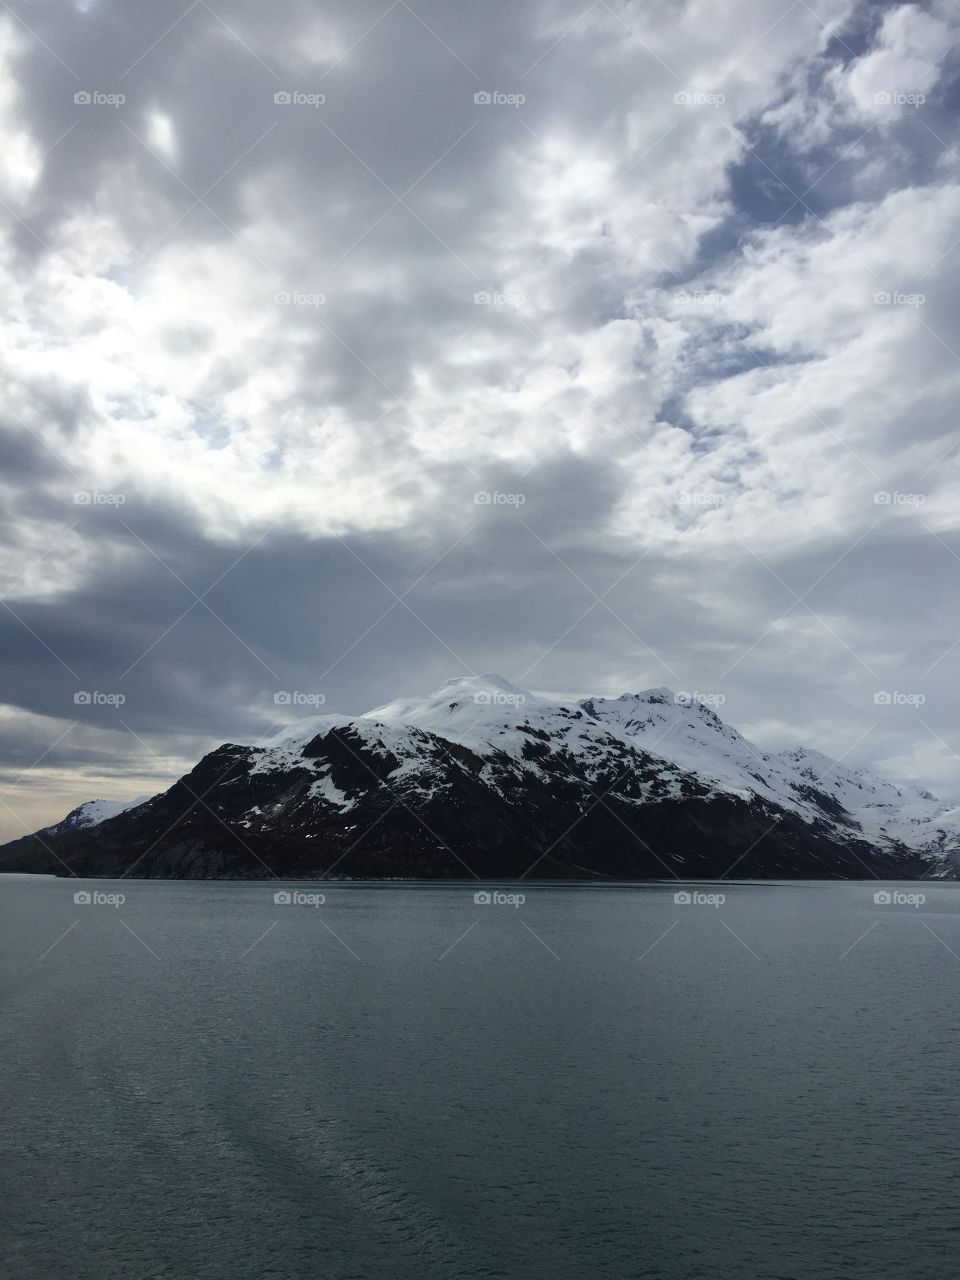 More of our view cruising through Glacier Bay in Alaska